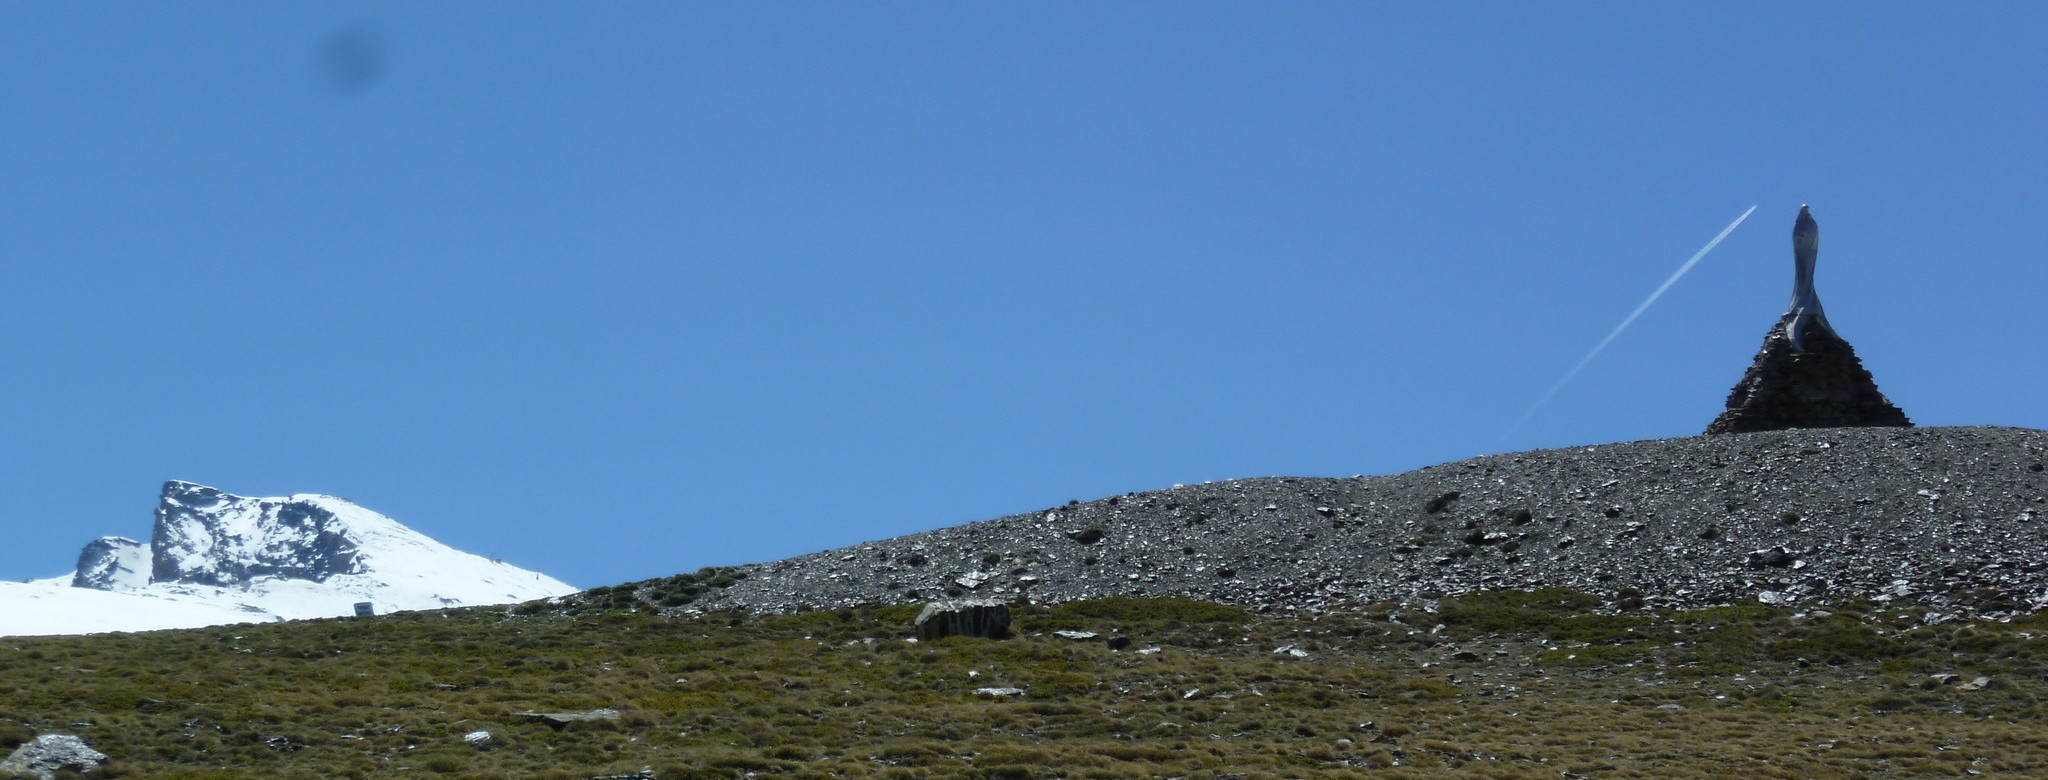 auf 2700m ü.NN - Virgen de las Nieves und Pico del Veleta